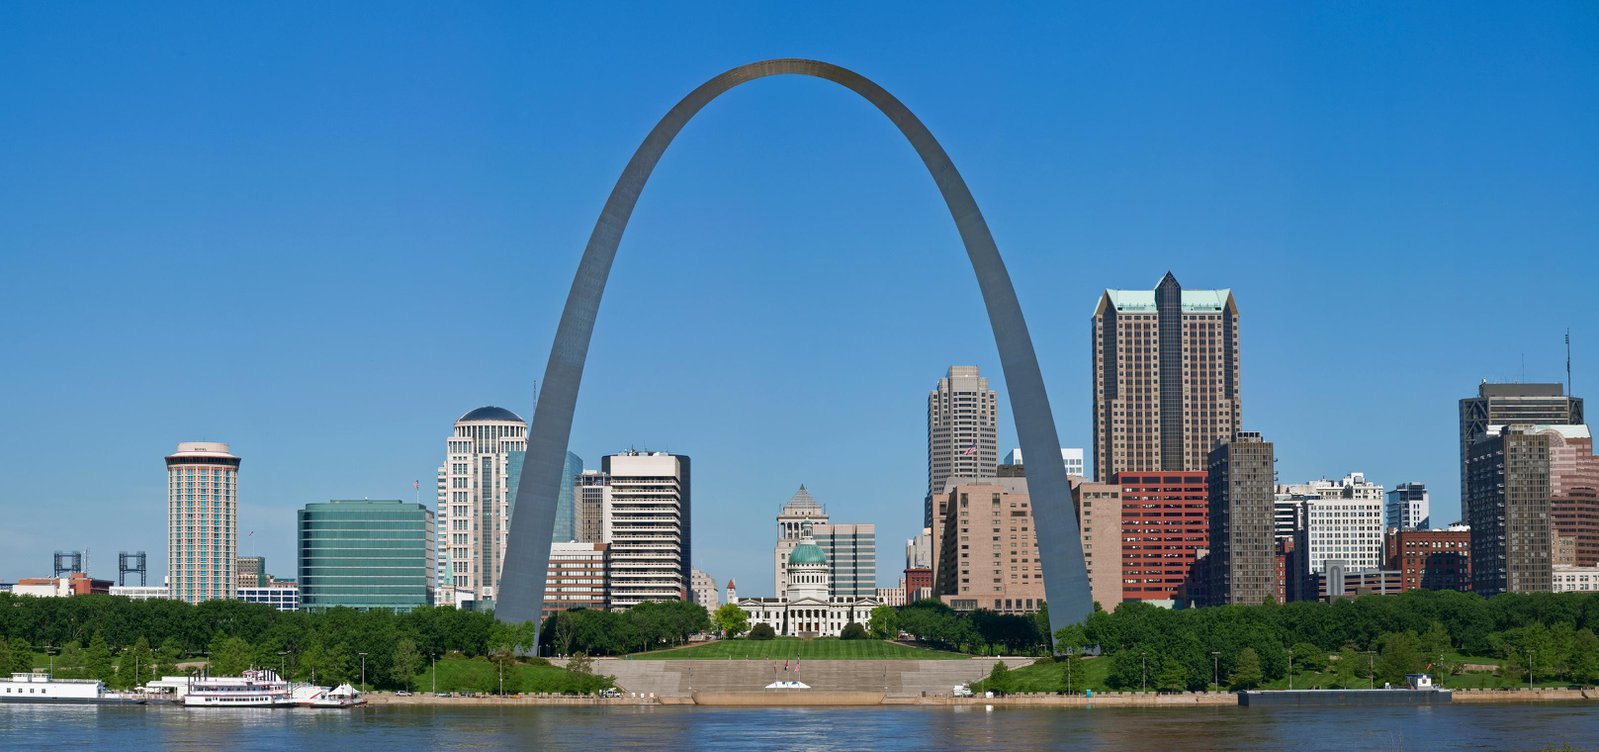 American Landmarks Series: The St. Louis Gateway Arch